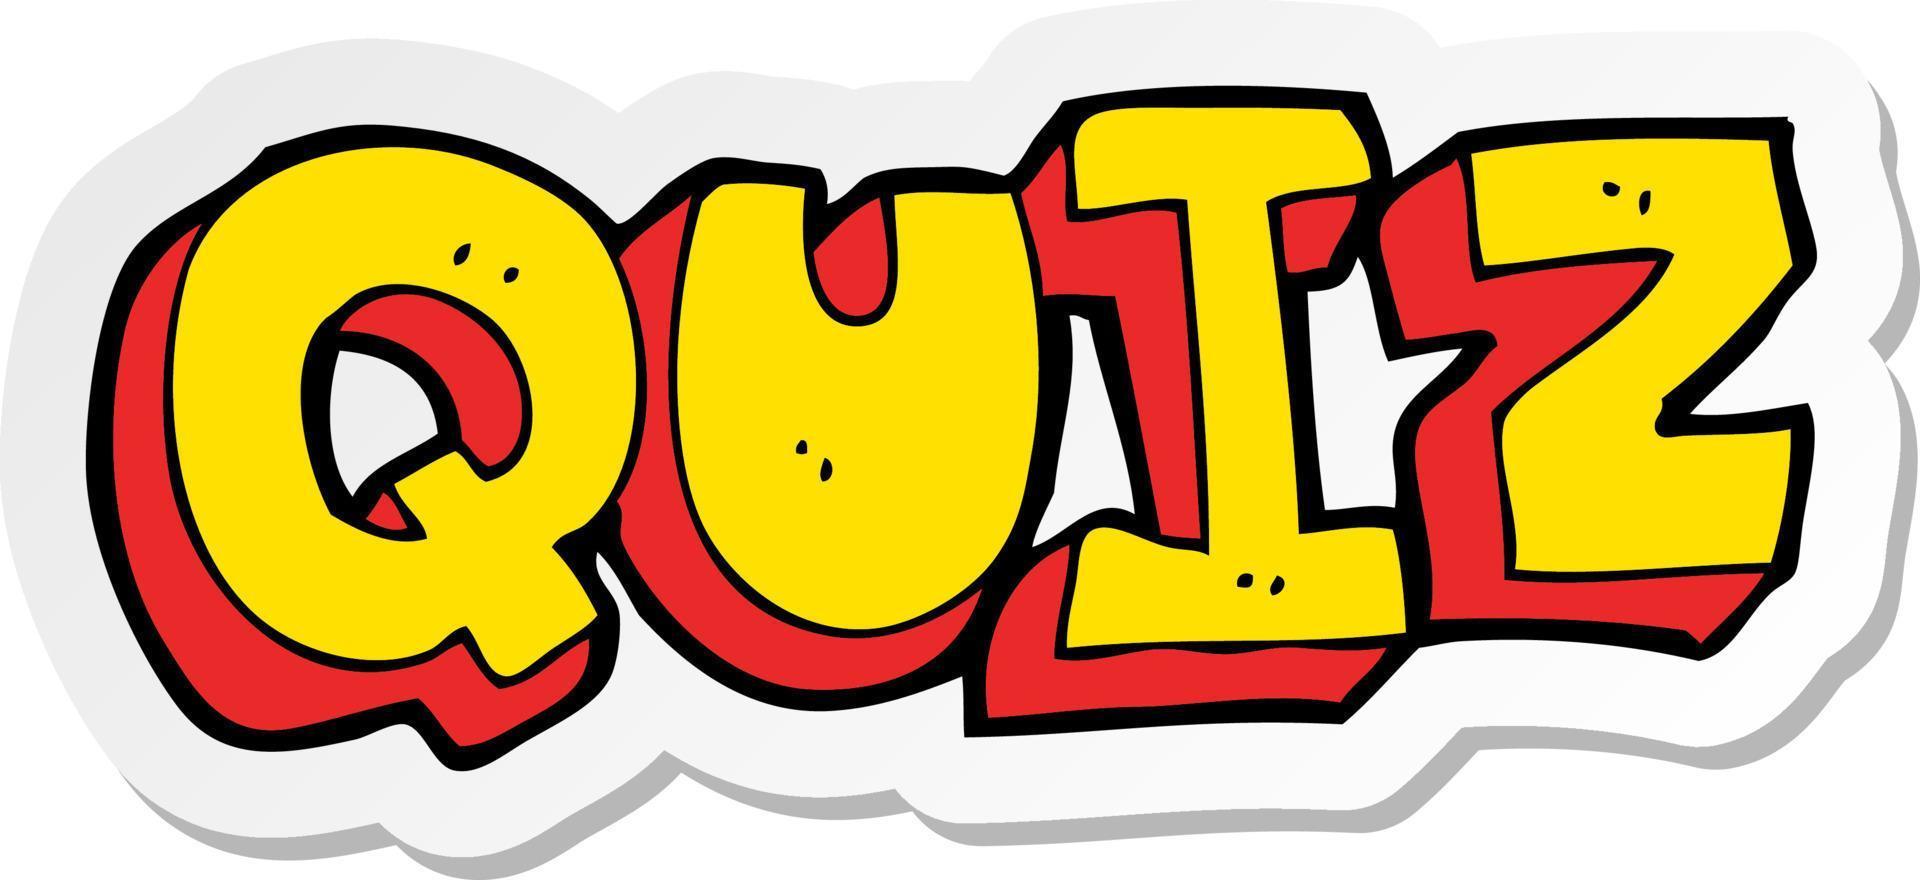 sticker of a cartoon quiz sign vector